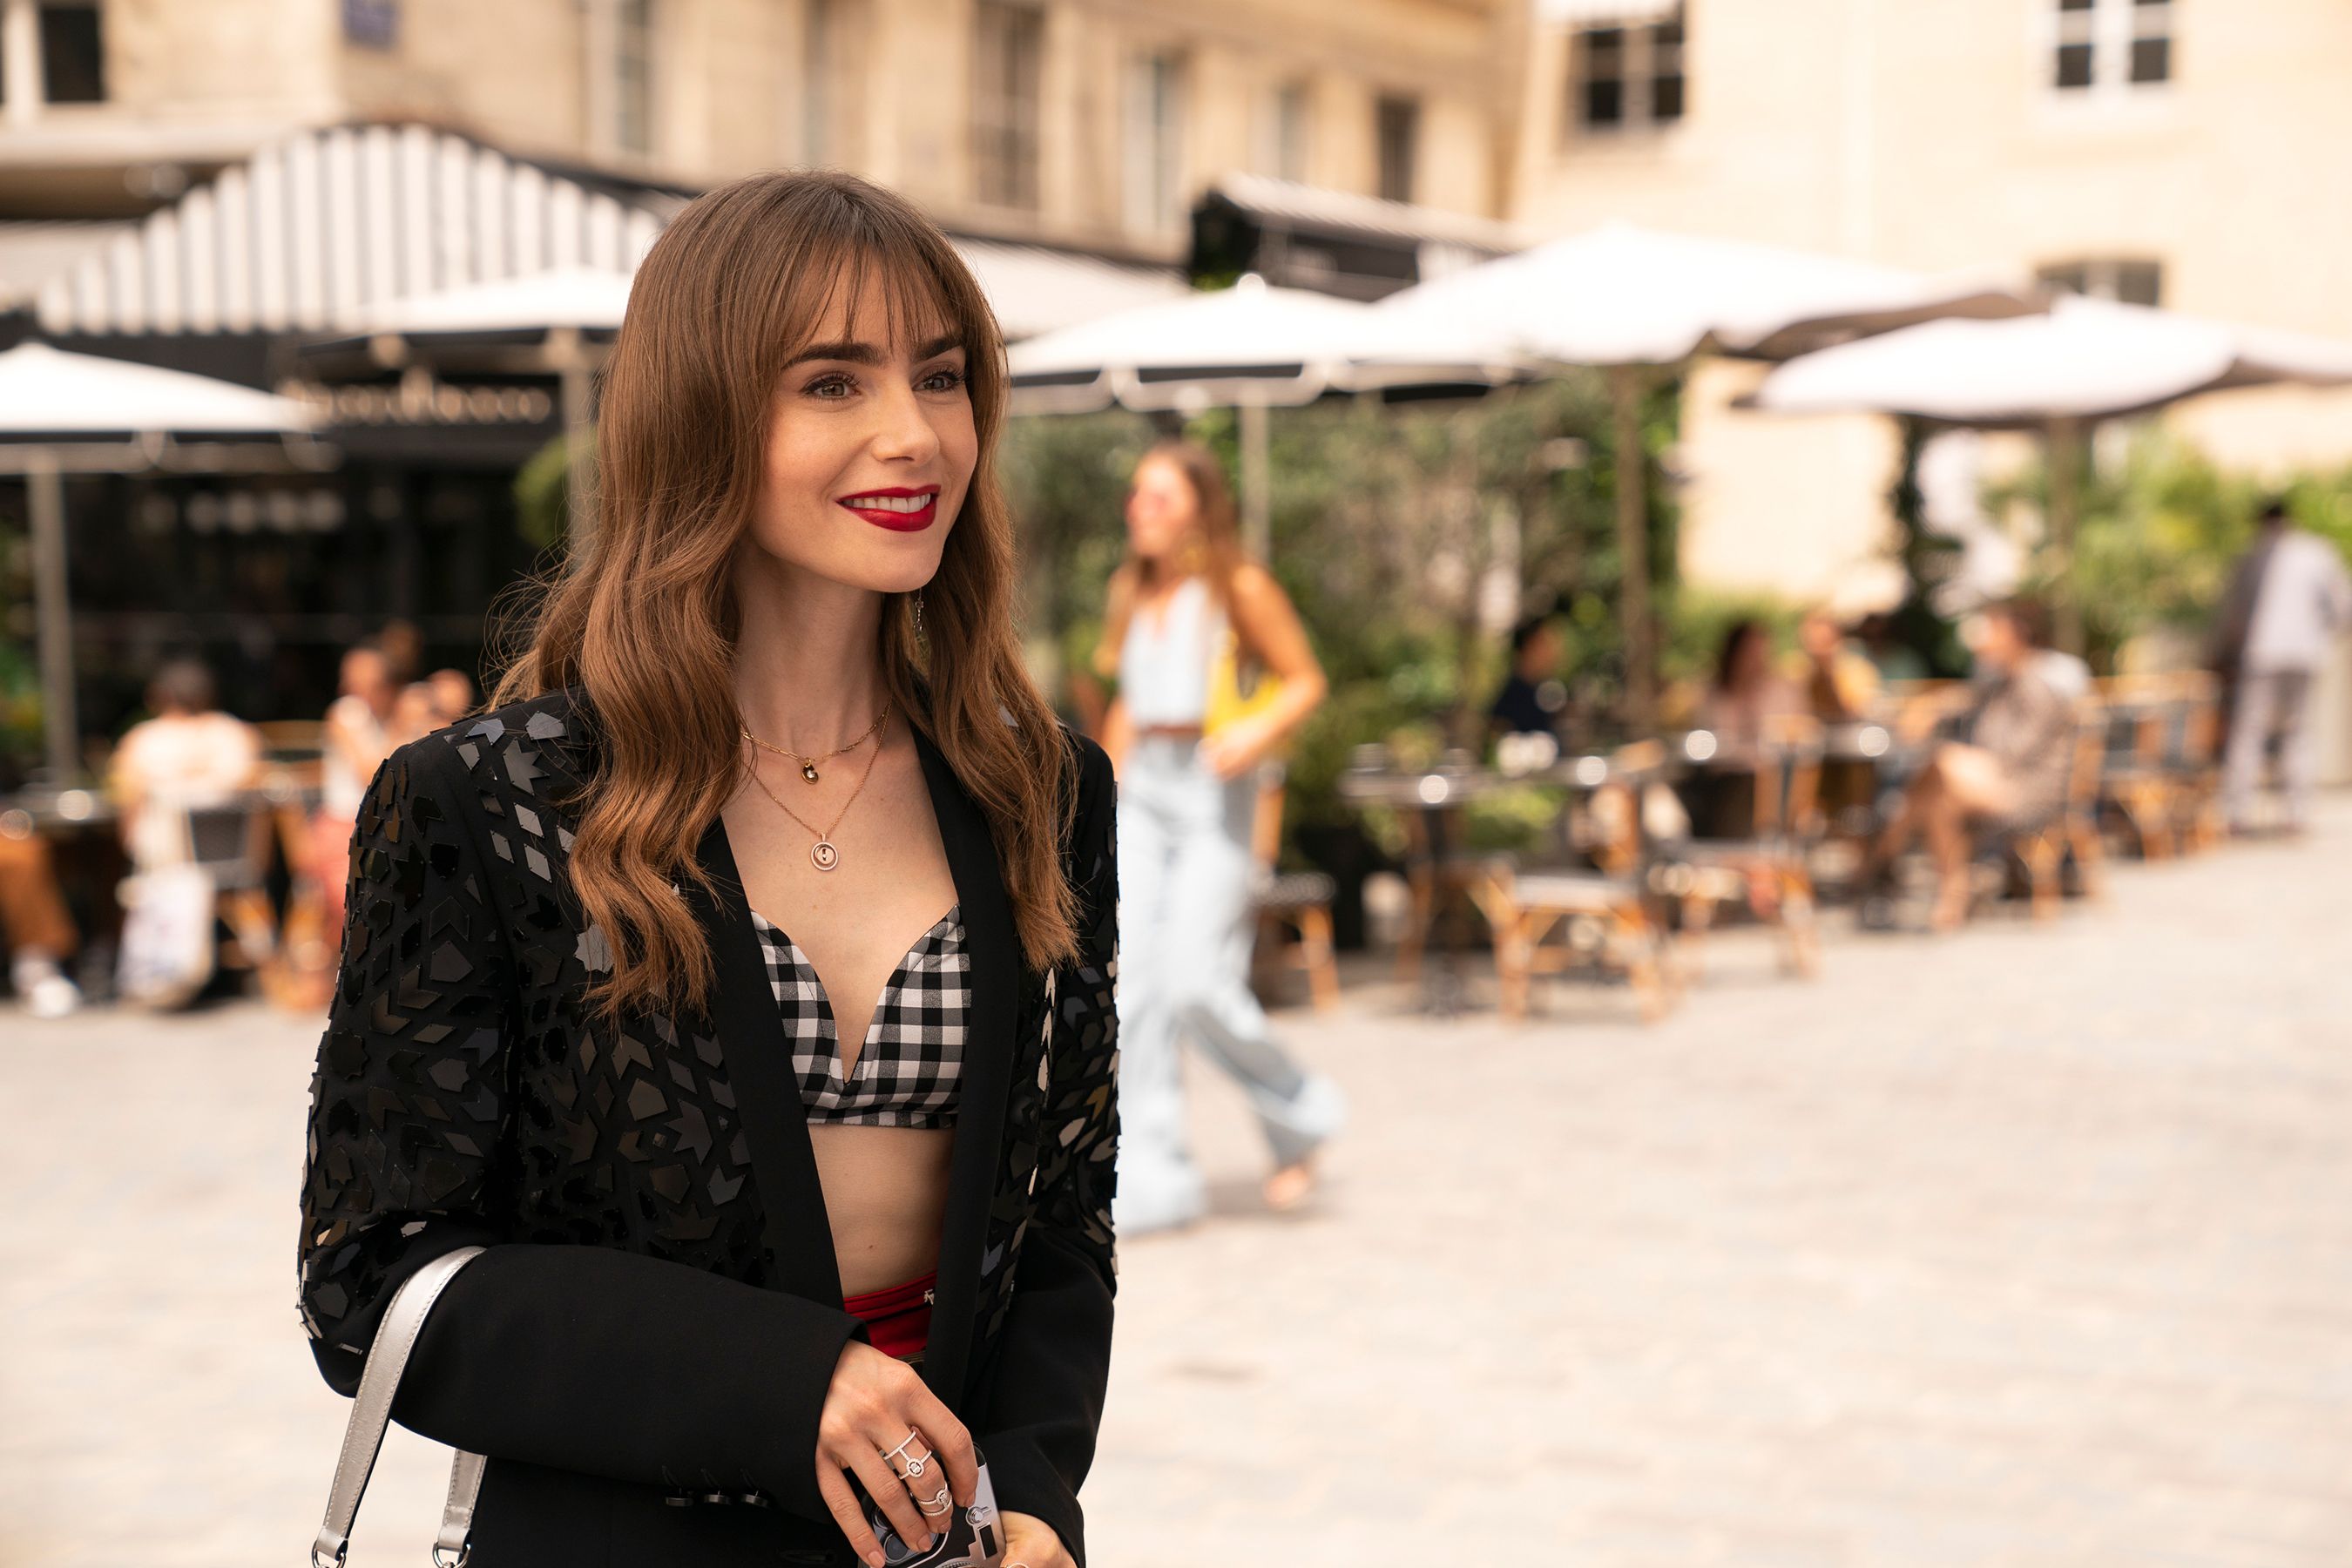 Emily in Paris Season 3 News, Cast, Spoilers, Premiere Date